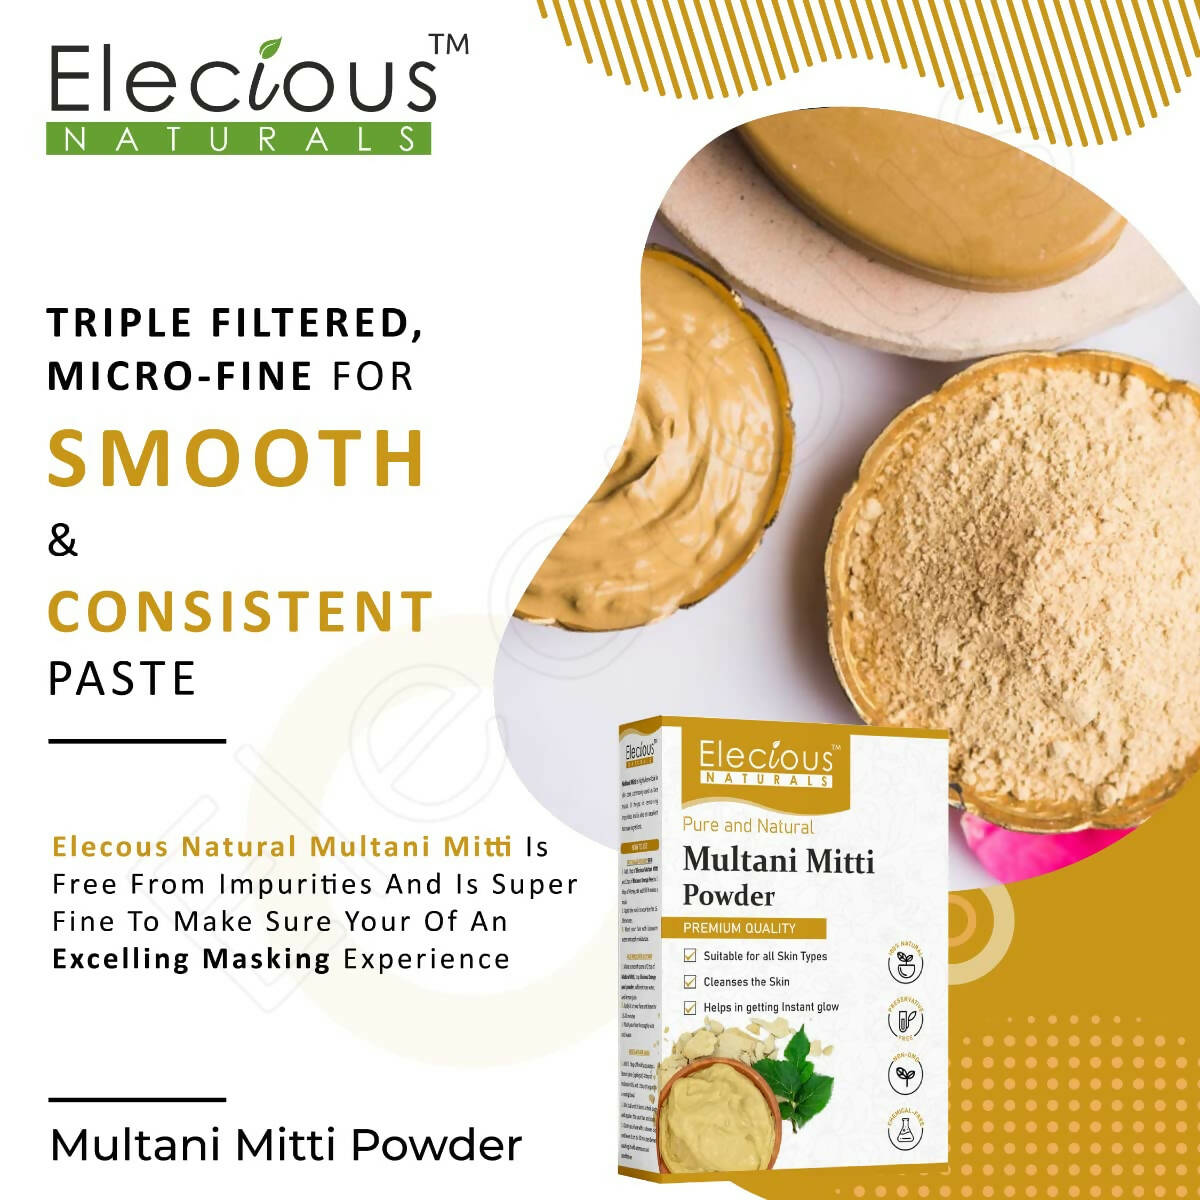 Elecious Naturals Multani Mitti Powder